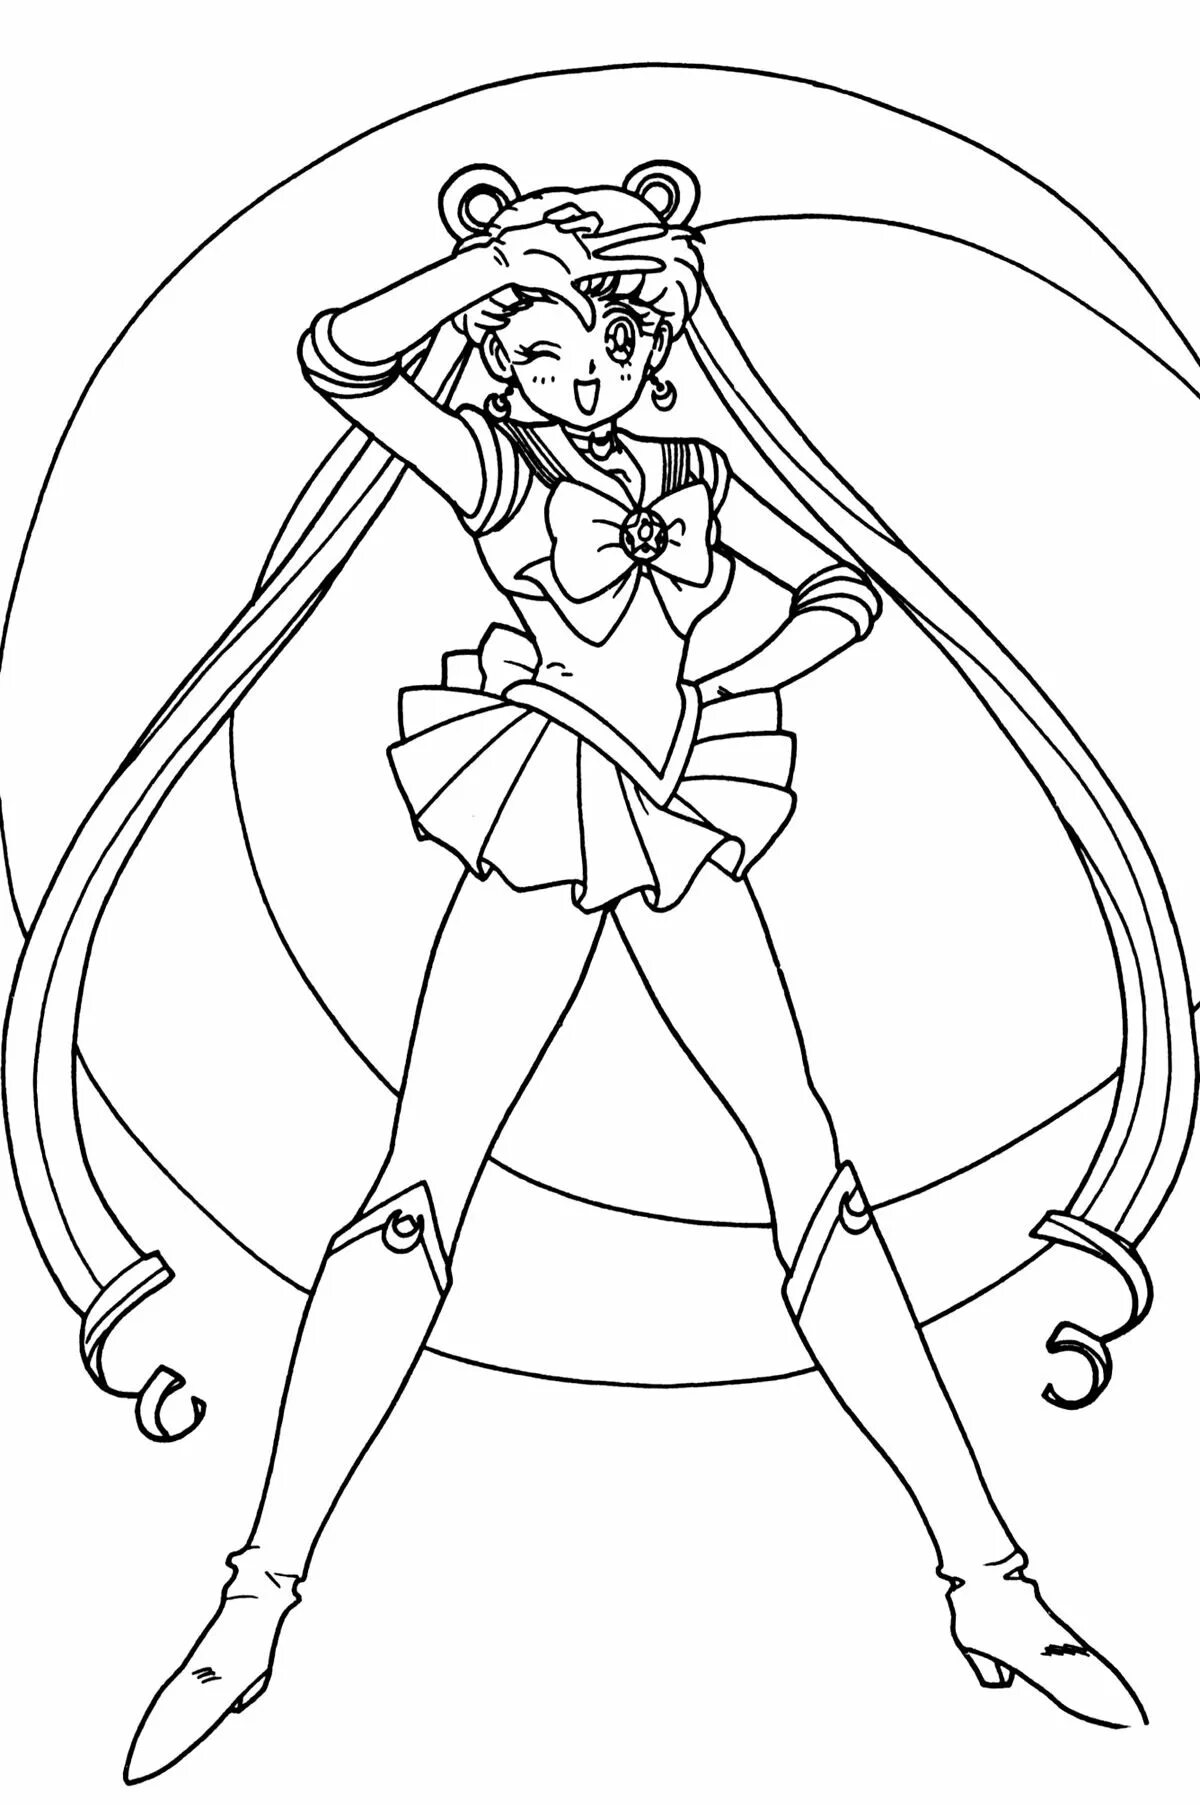 Sailor moon #4